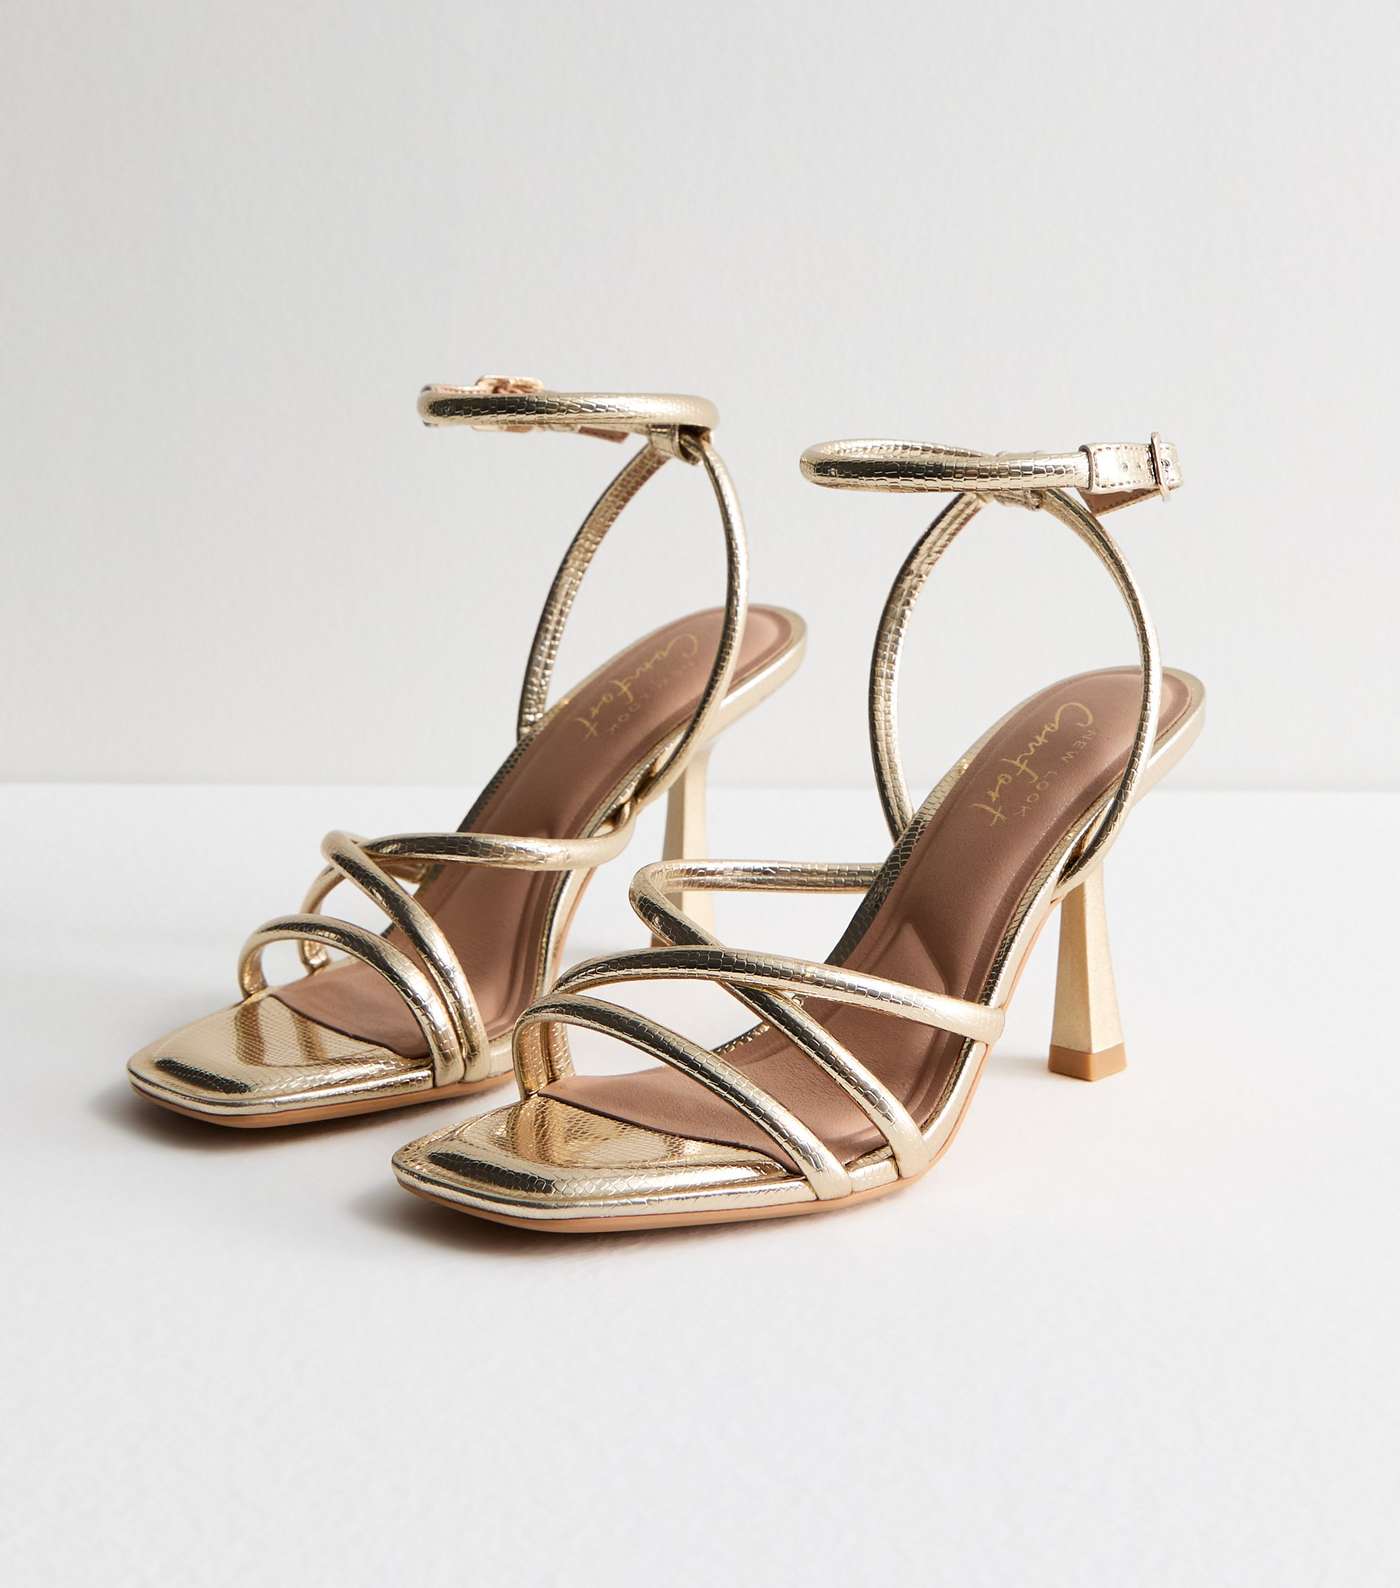 Gold Multi Strap Stiletto Heel Sandals Image 3